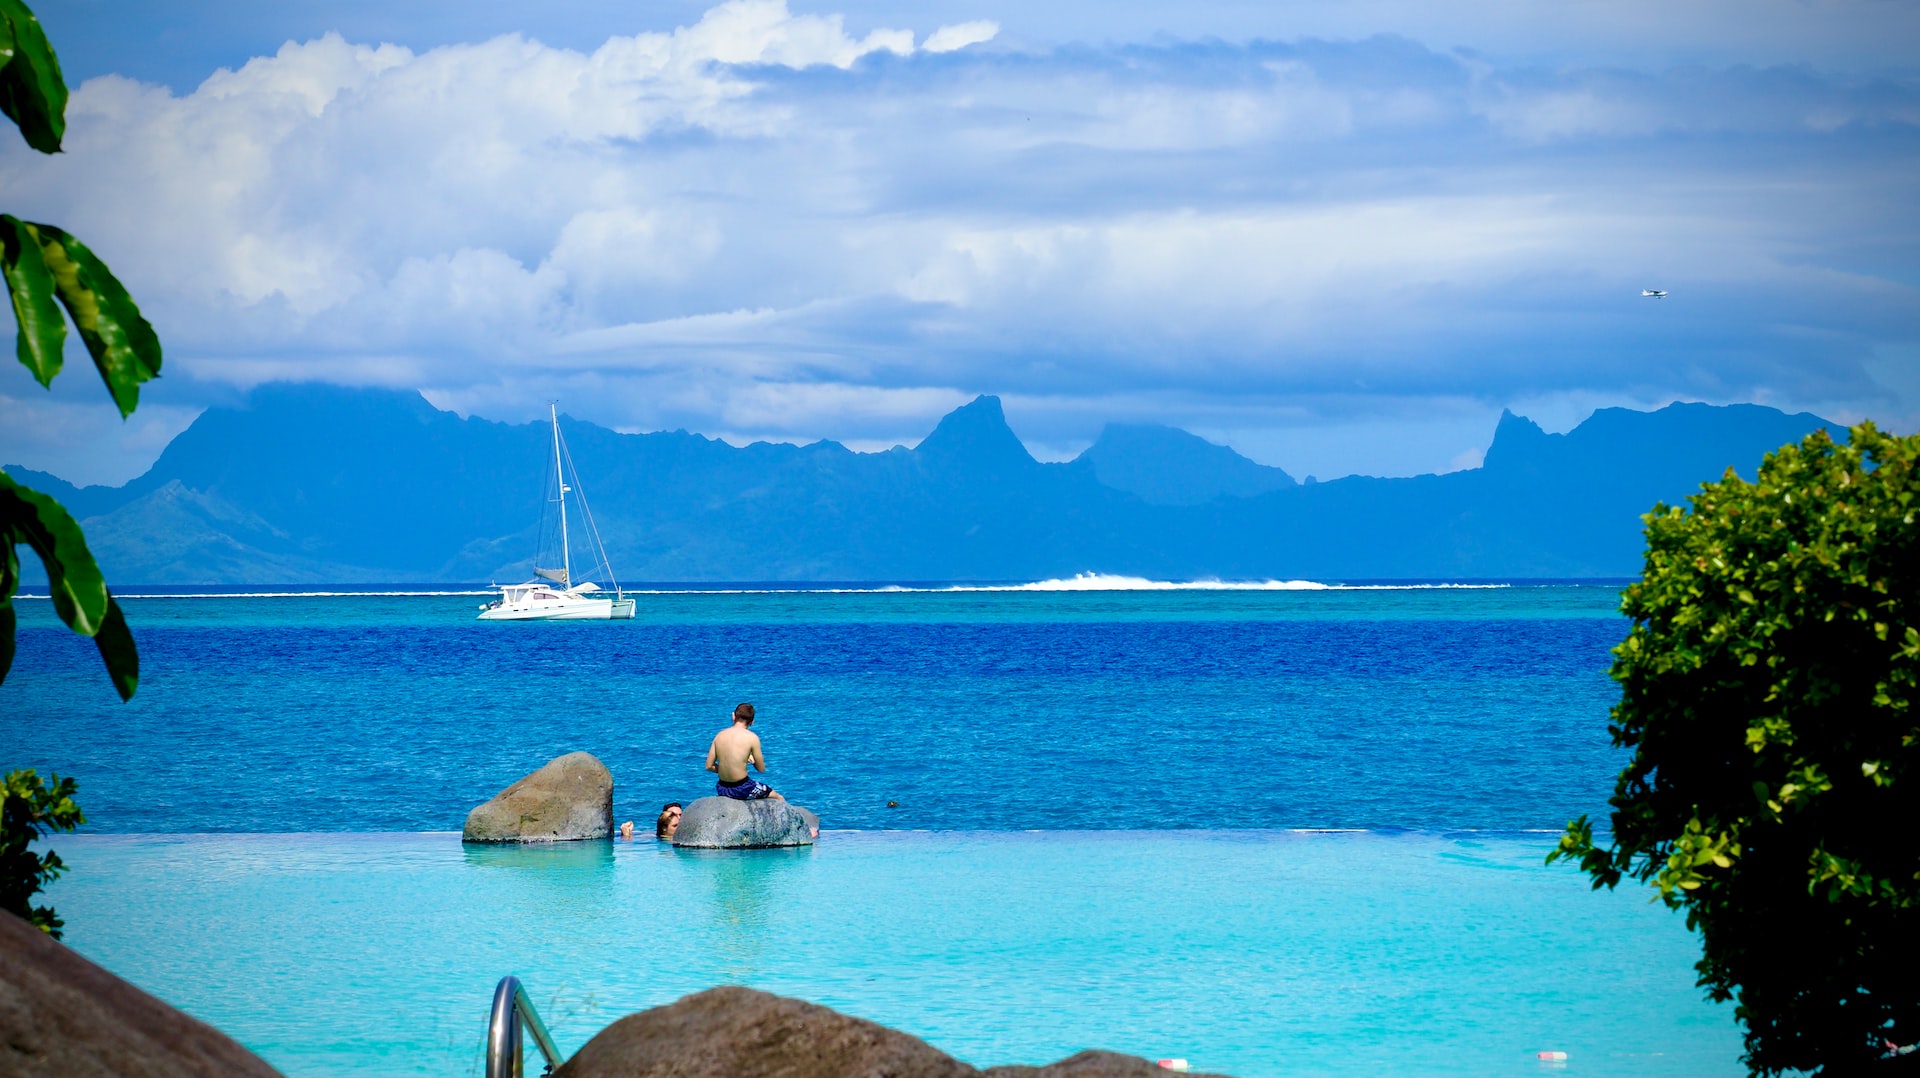 Image of Tahiti by Kazuo ota via Unsplash